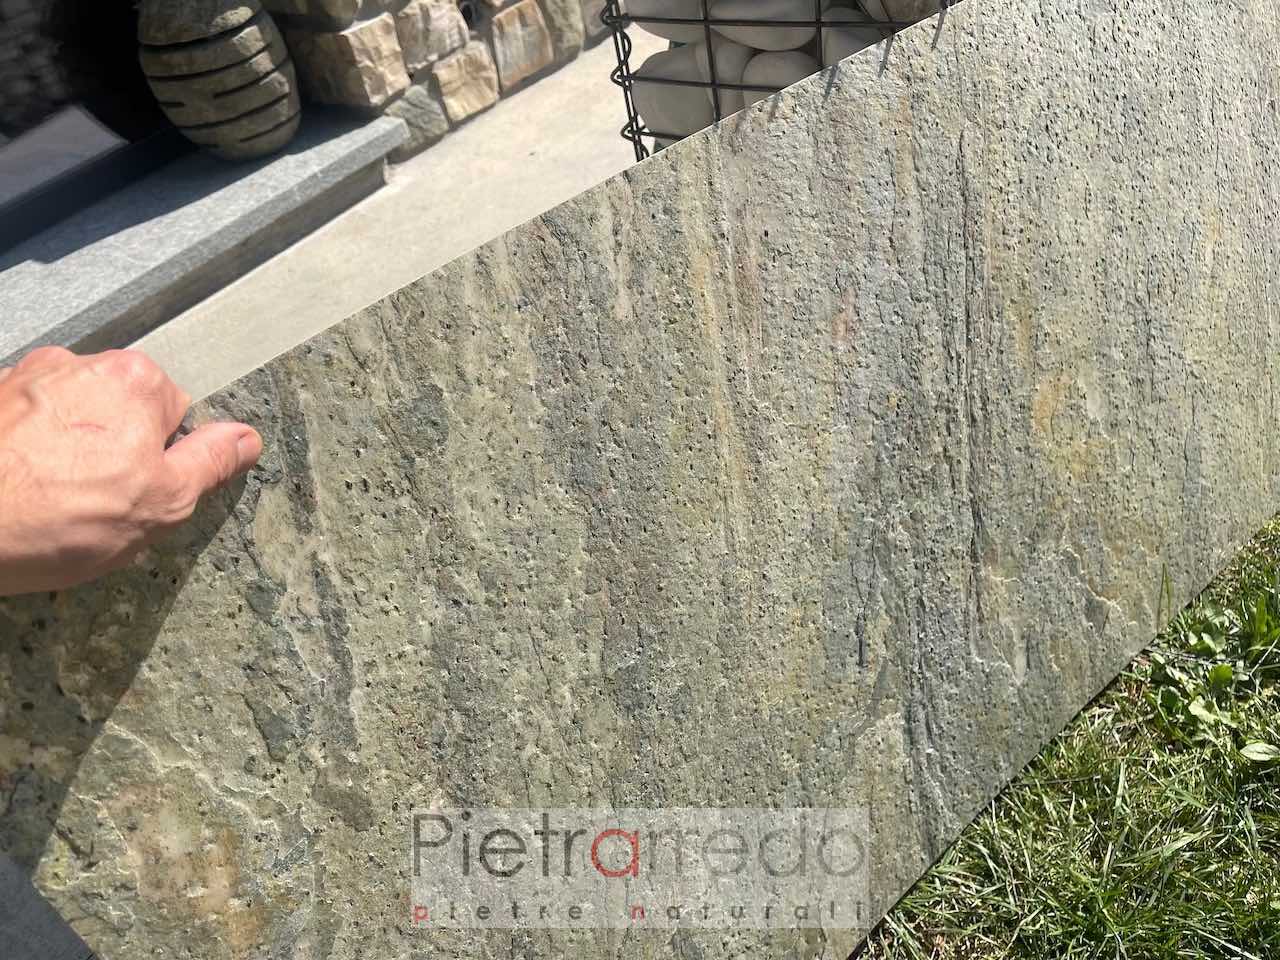 transparent translucent natural stone sheet jeera green pietrarredo 122x61cm offer price